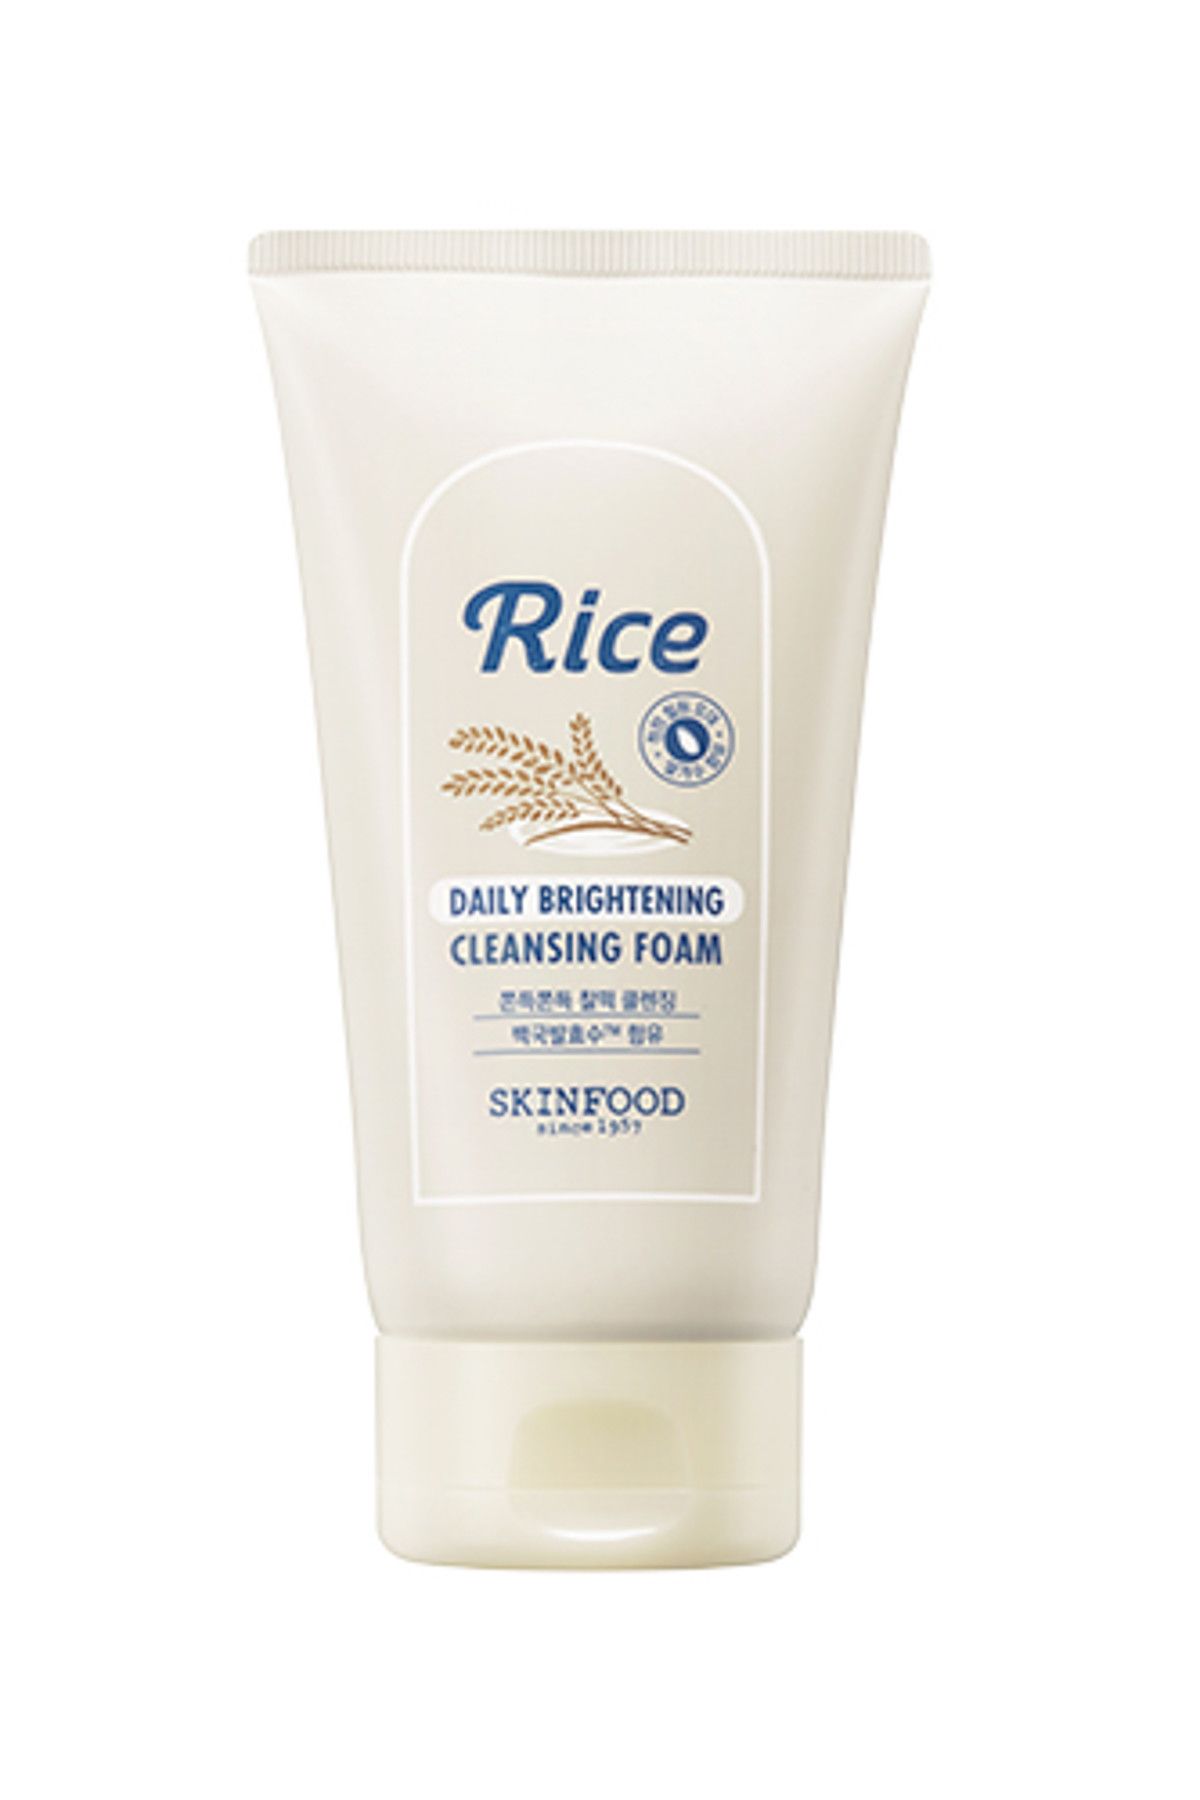 Skinfood Yüz Temizleme Köpüğü - Rice Daily Brightening Cleansing Foam150 ml 8809511279422